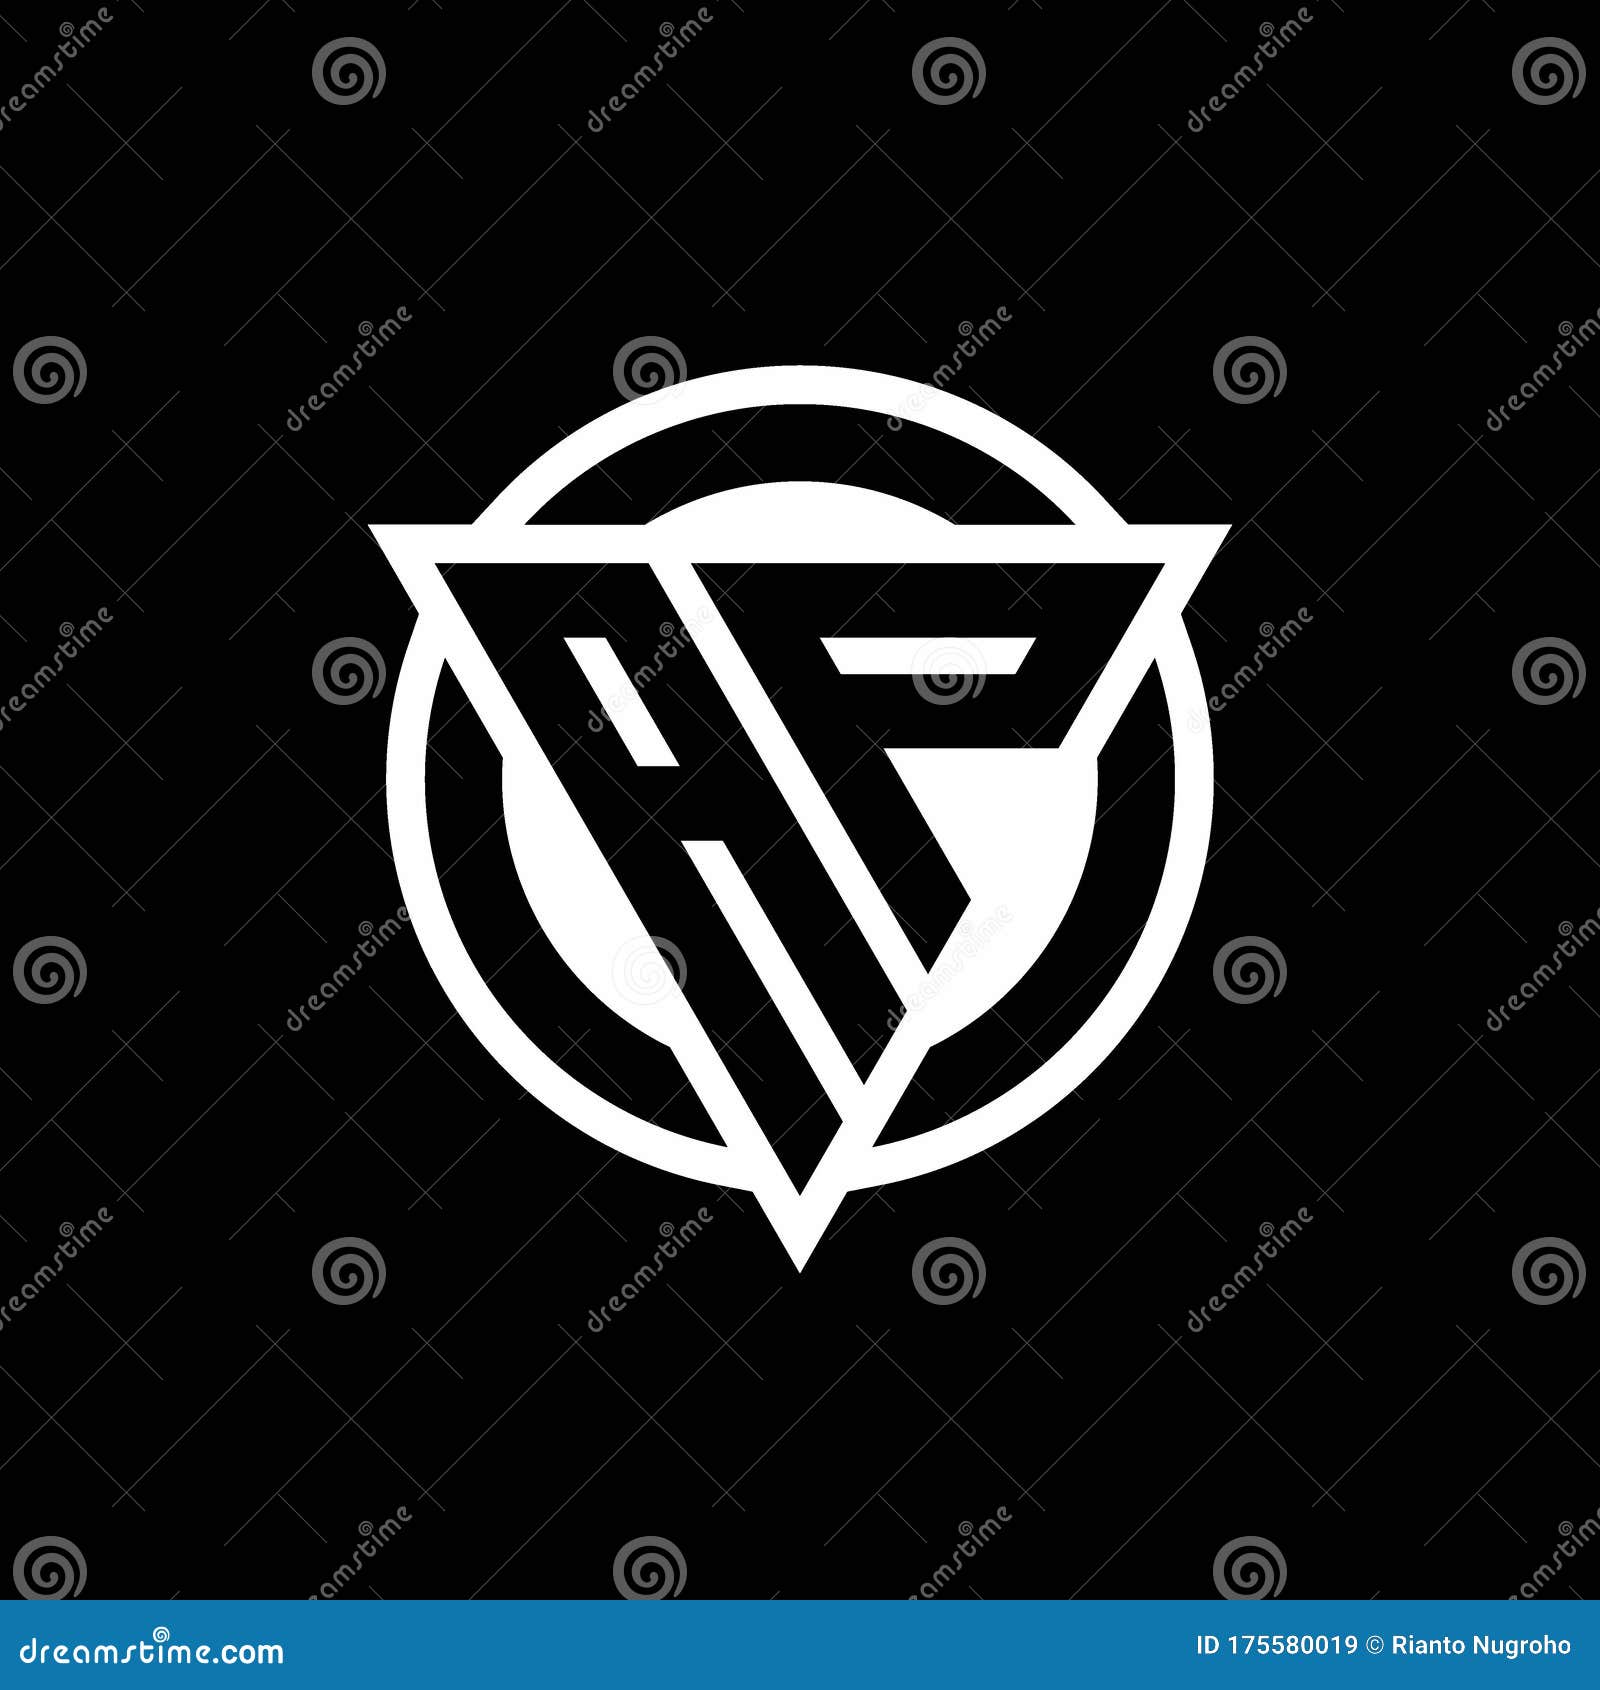 Details 88+ about ap logo tattoo super cool .vn